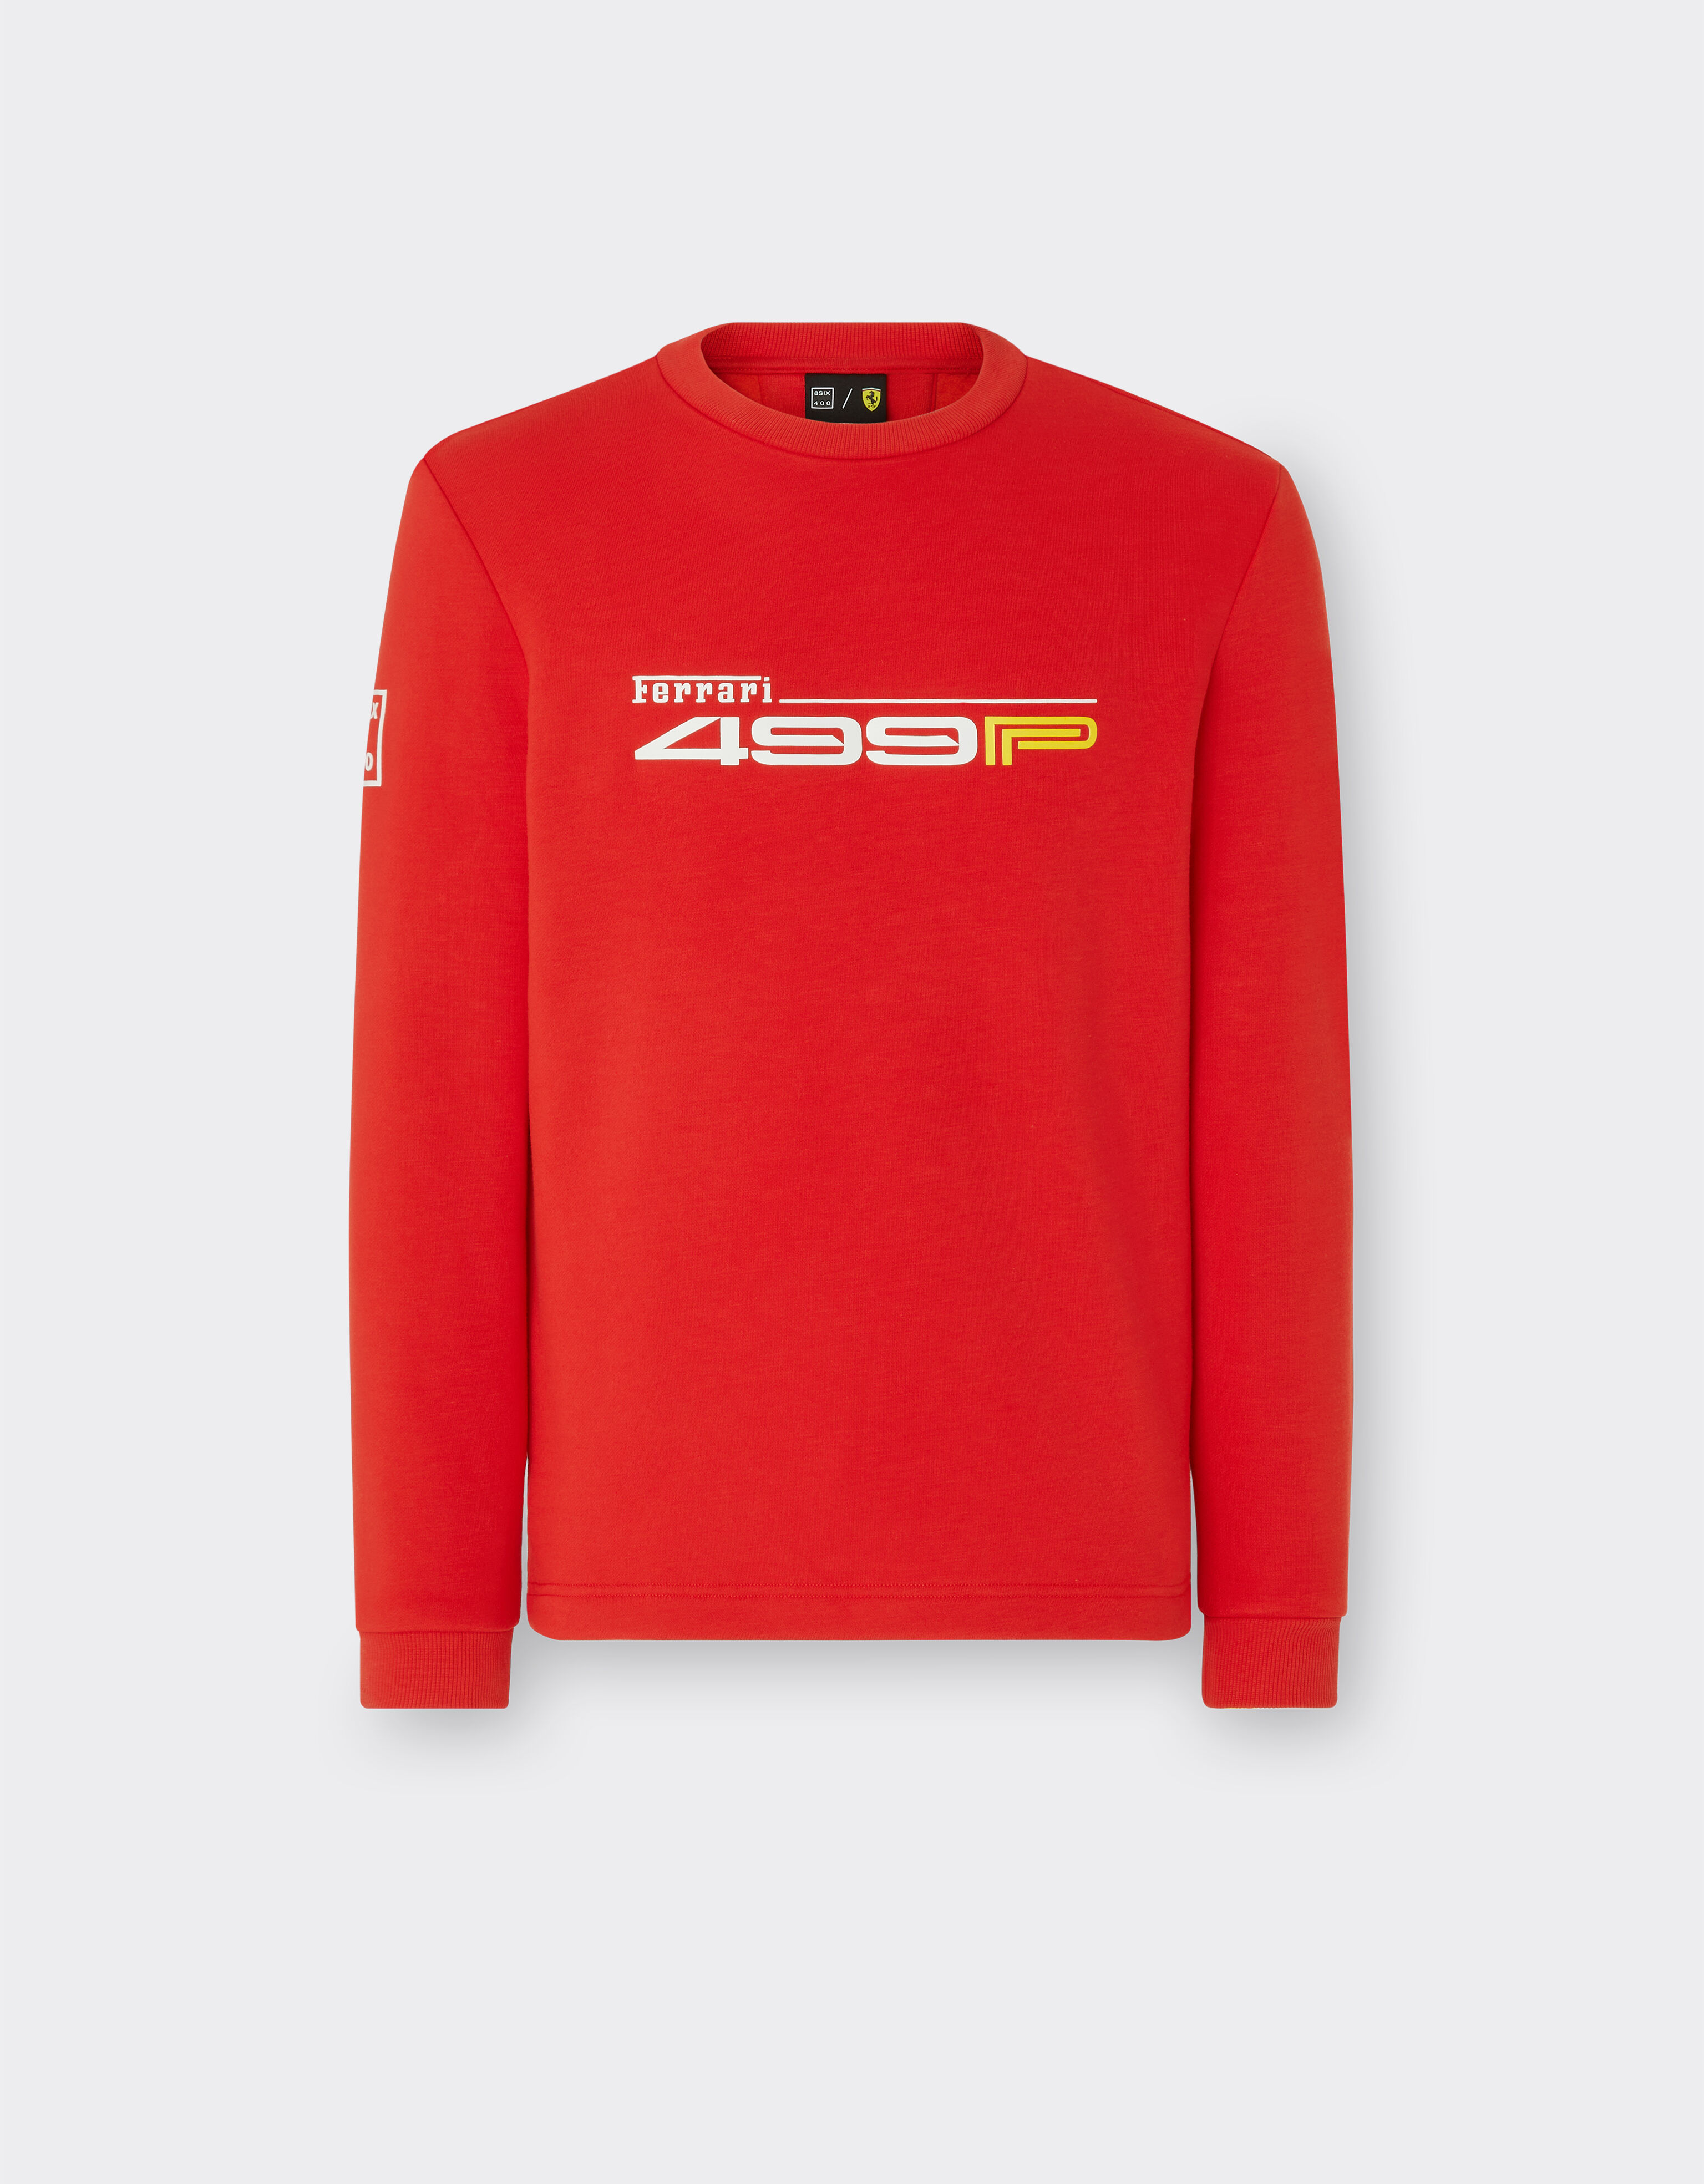 ${brand} Ferrari Hypercar 499P Sweatshirt ${colorDescription} ${masterID}